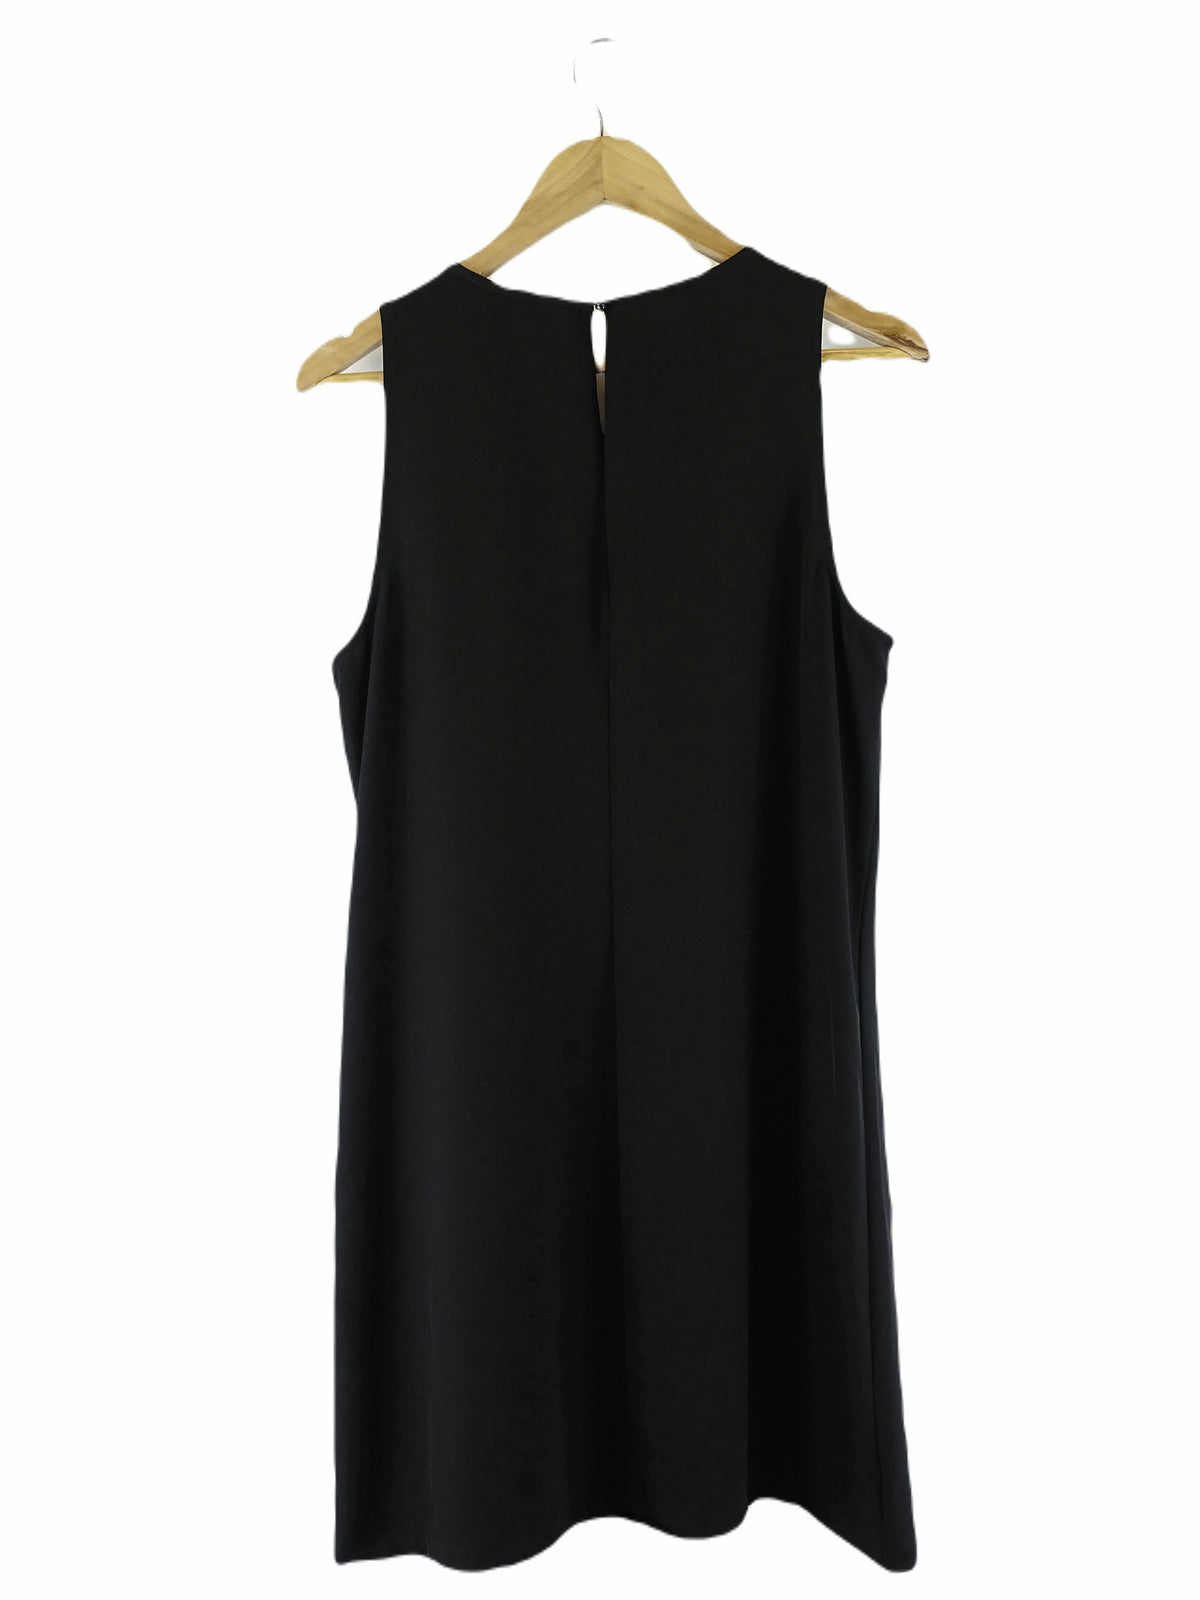 Wayne Cooper Black Sequin Sleeveless Dress 14